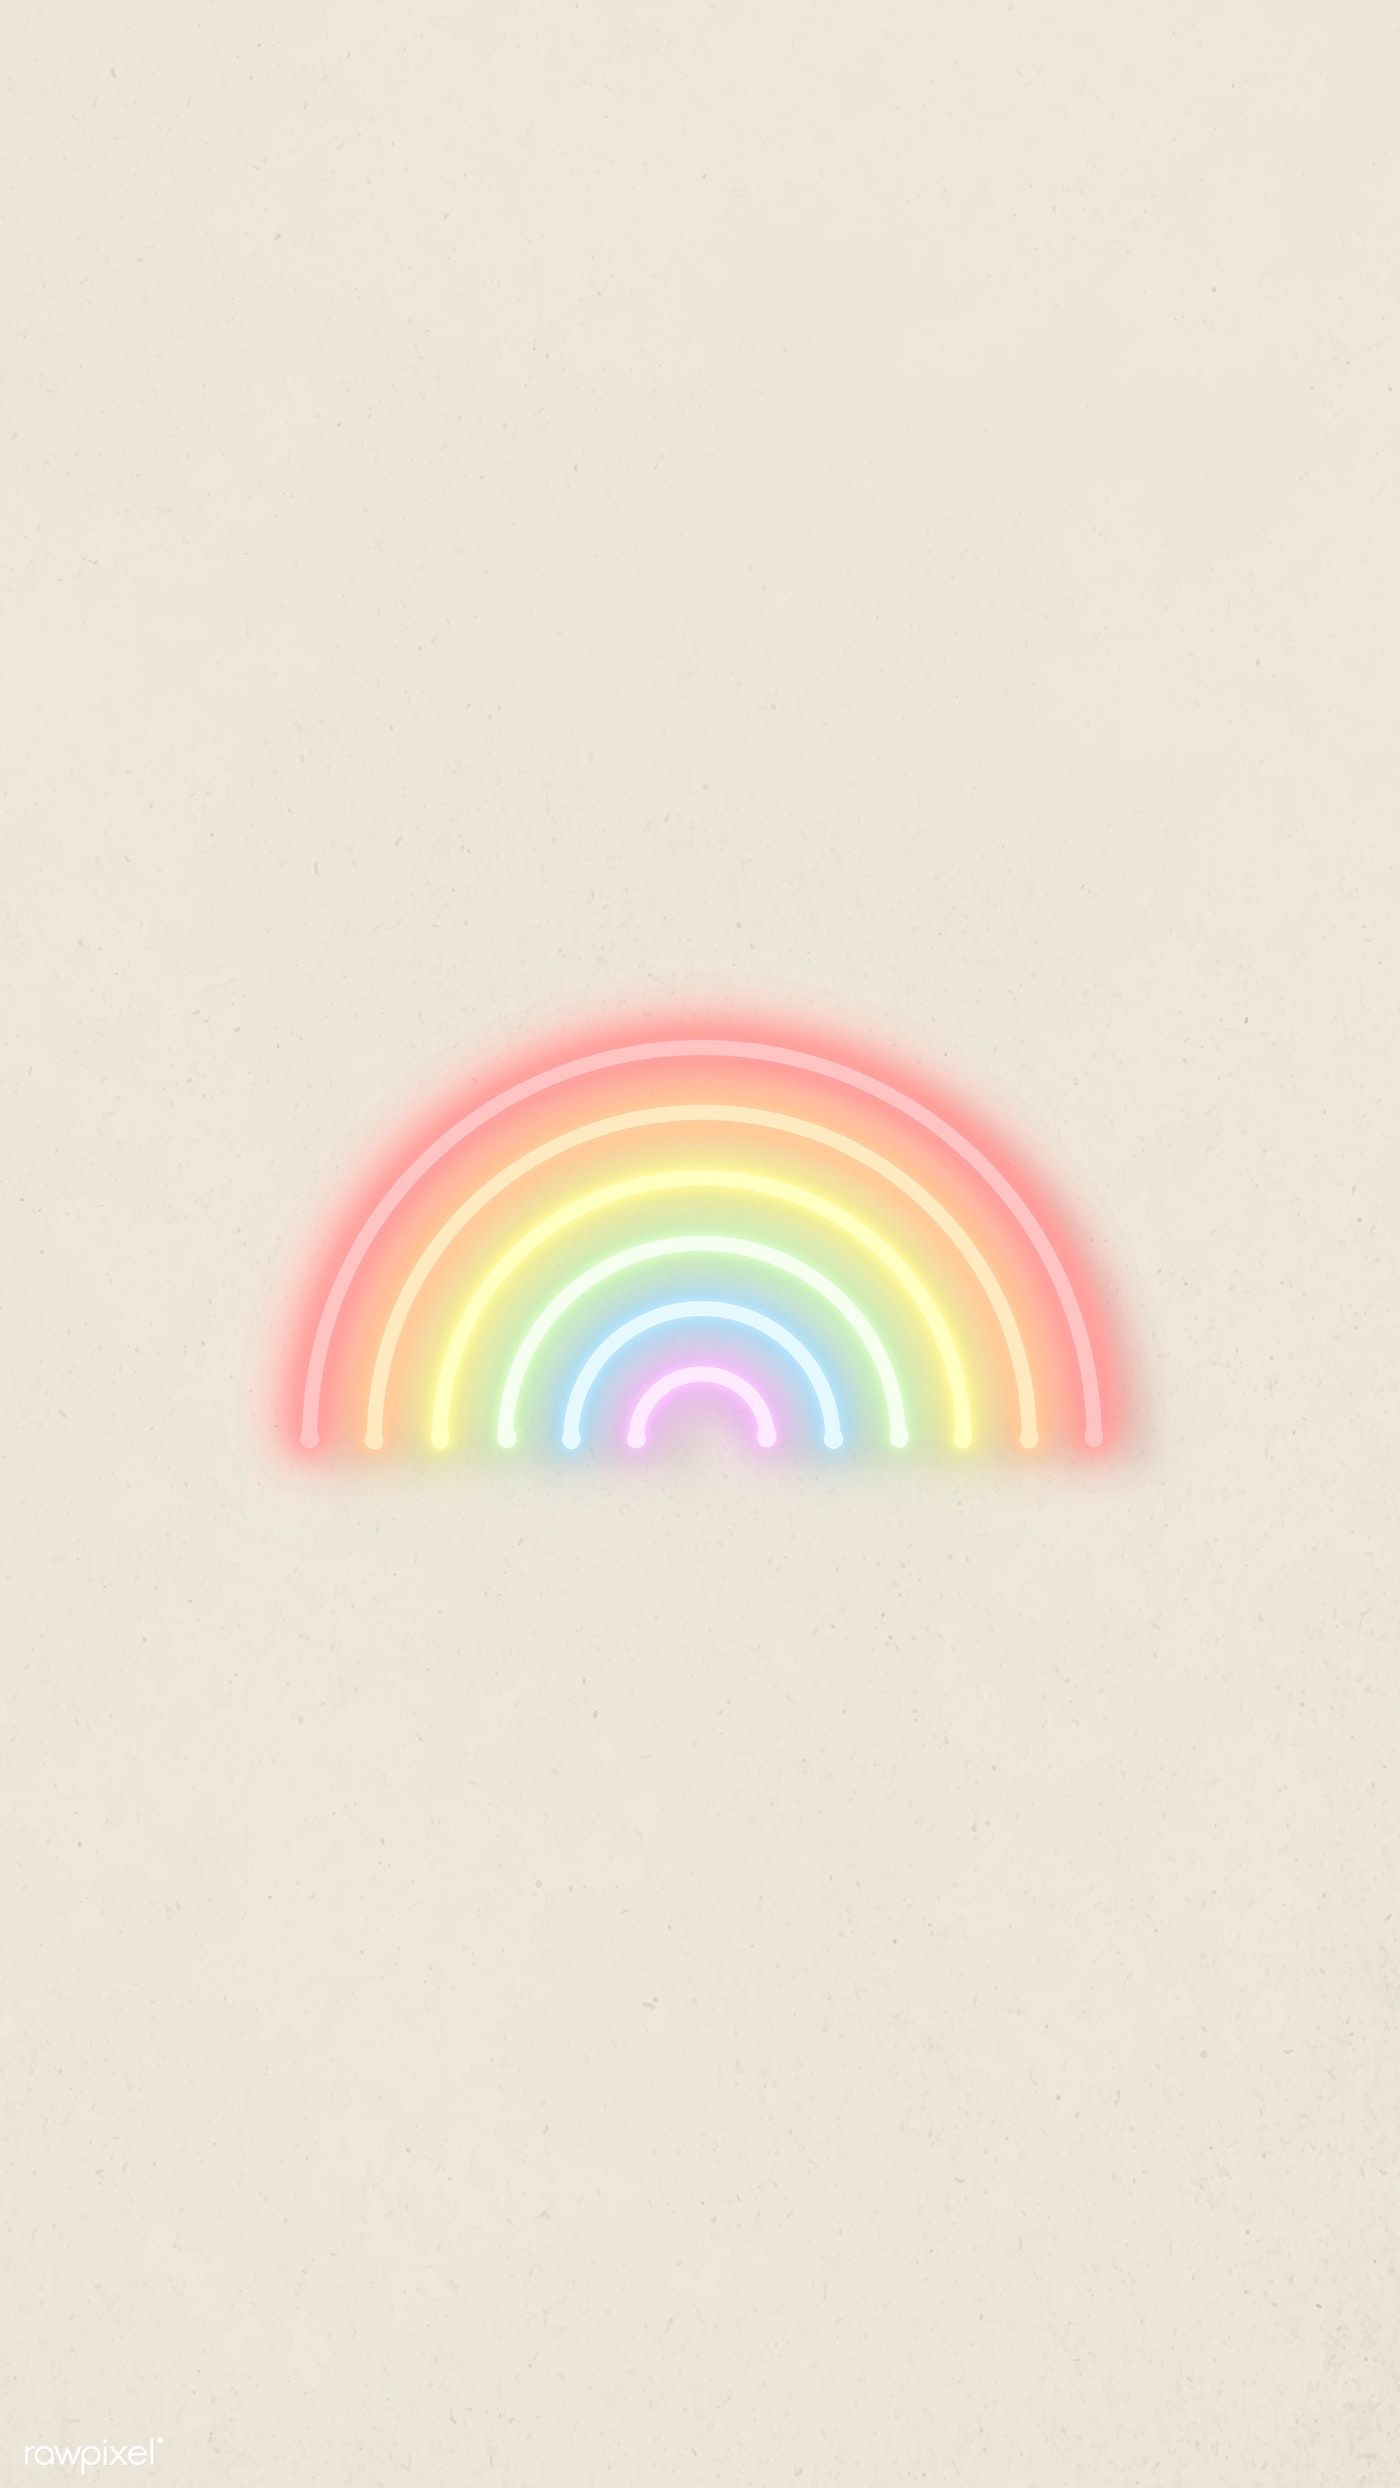 Neon rainbow on a white background - Rainbows